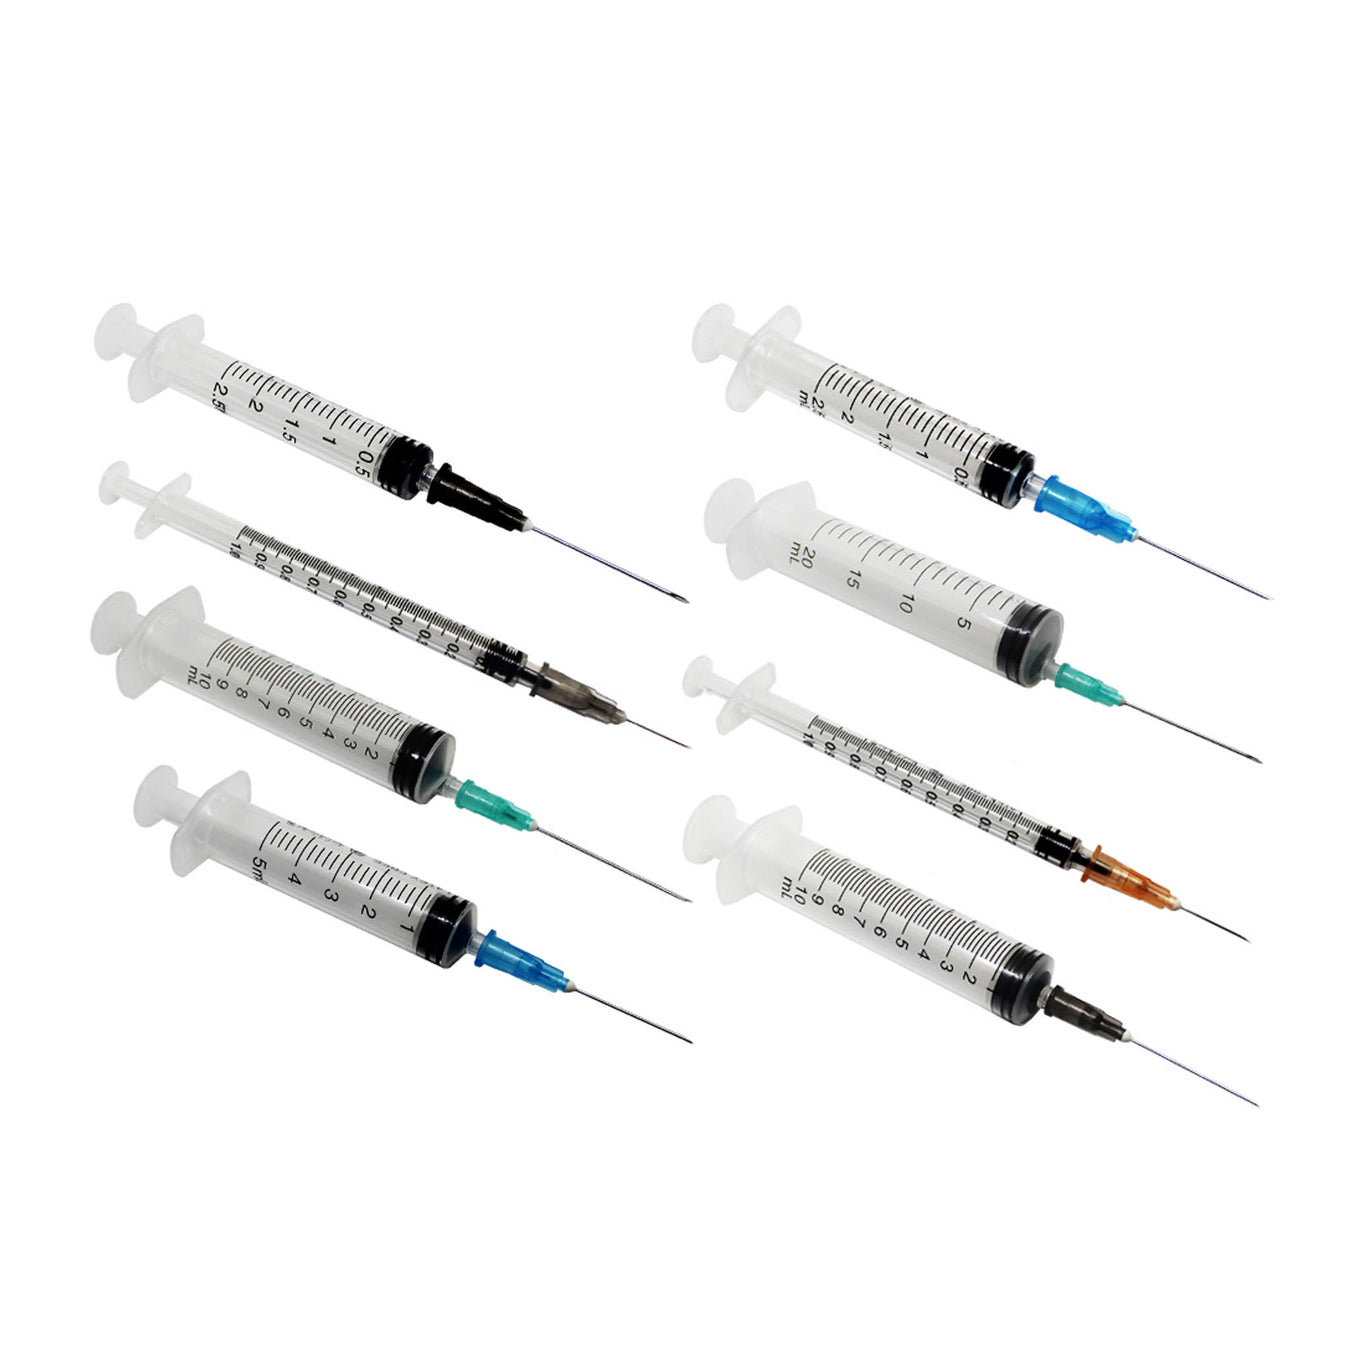 syringe and hypodermic needles